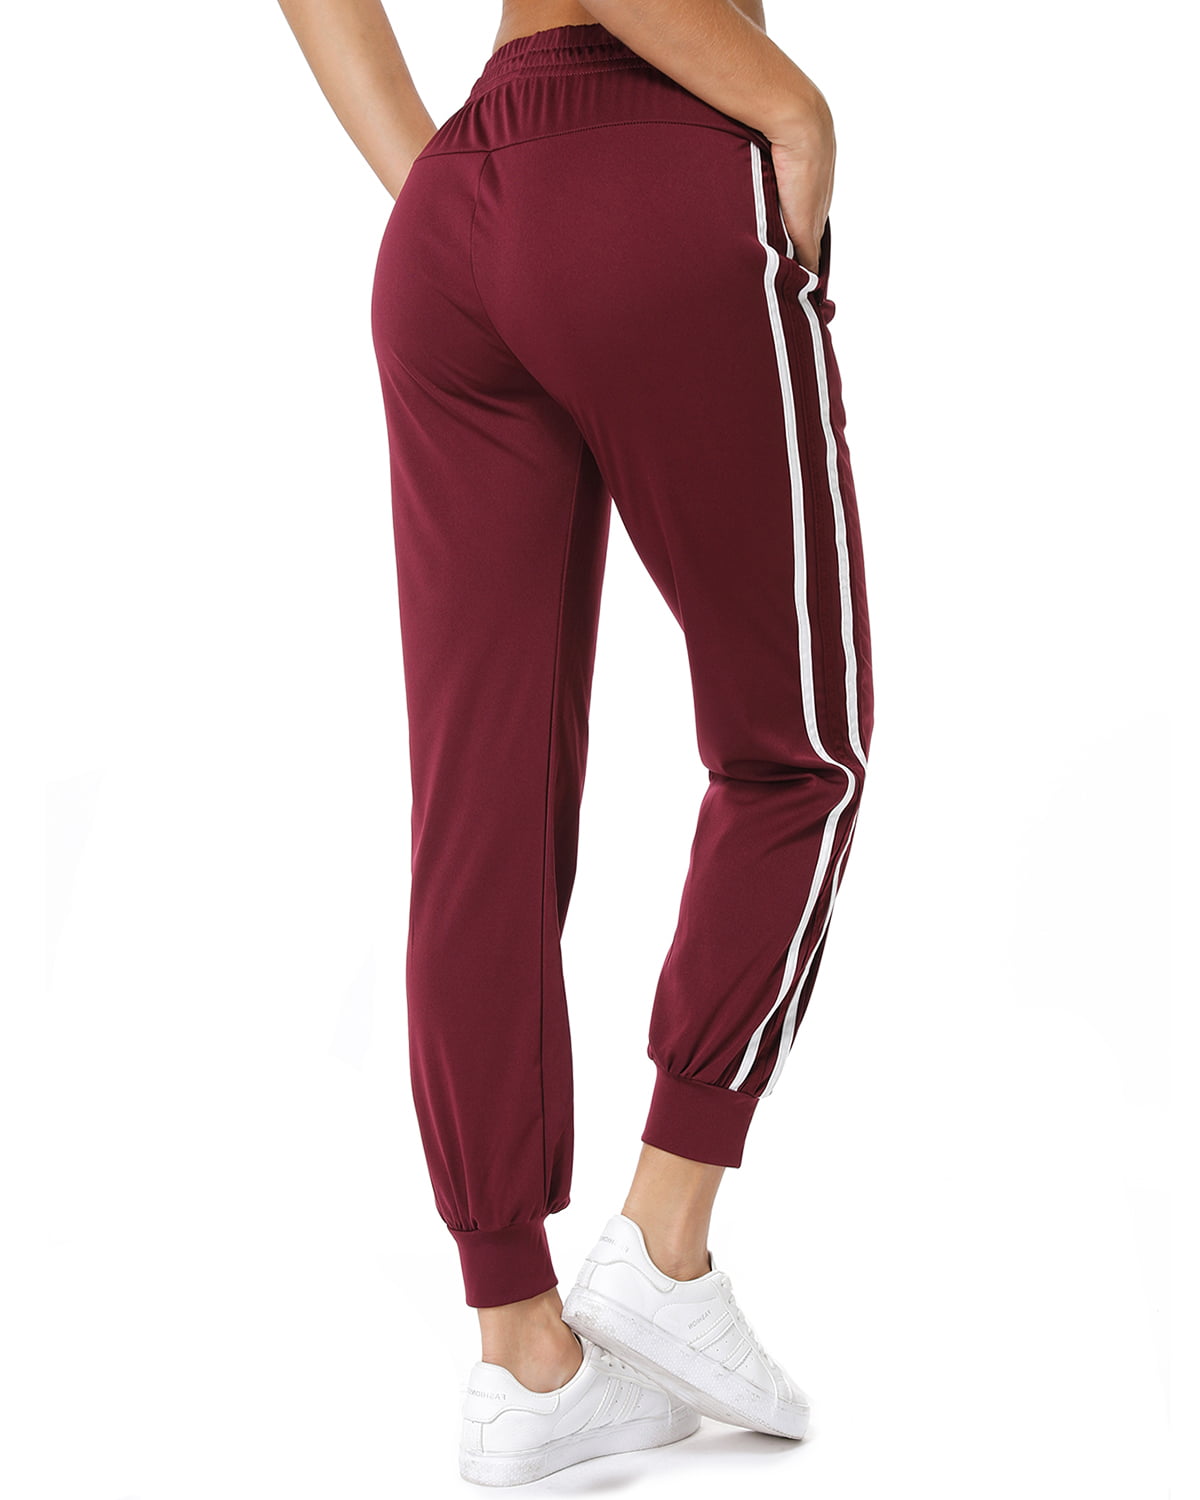 GIMDUMASA Women's Sweatpants Workout Athletic Jogger Pants with Pocket Elasticity Waist Tracksuit Bottoms for Women Sports Training Running GI06 